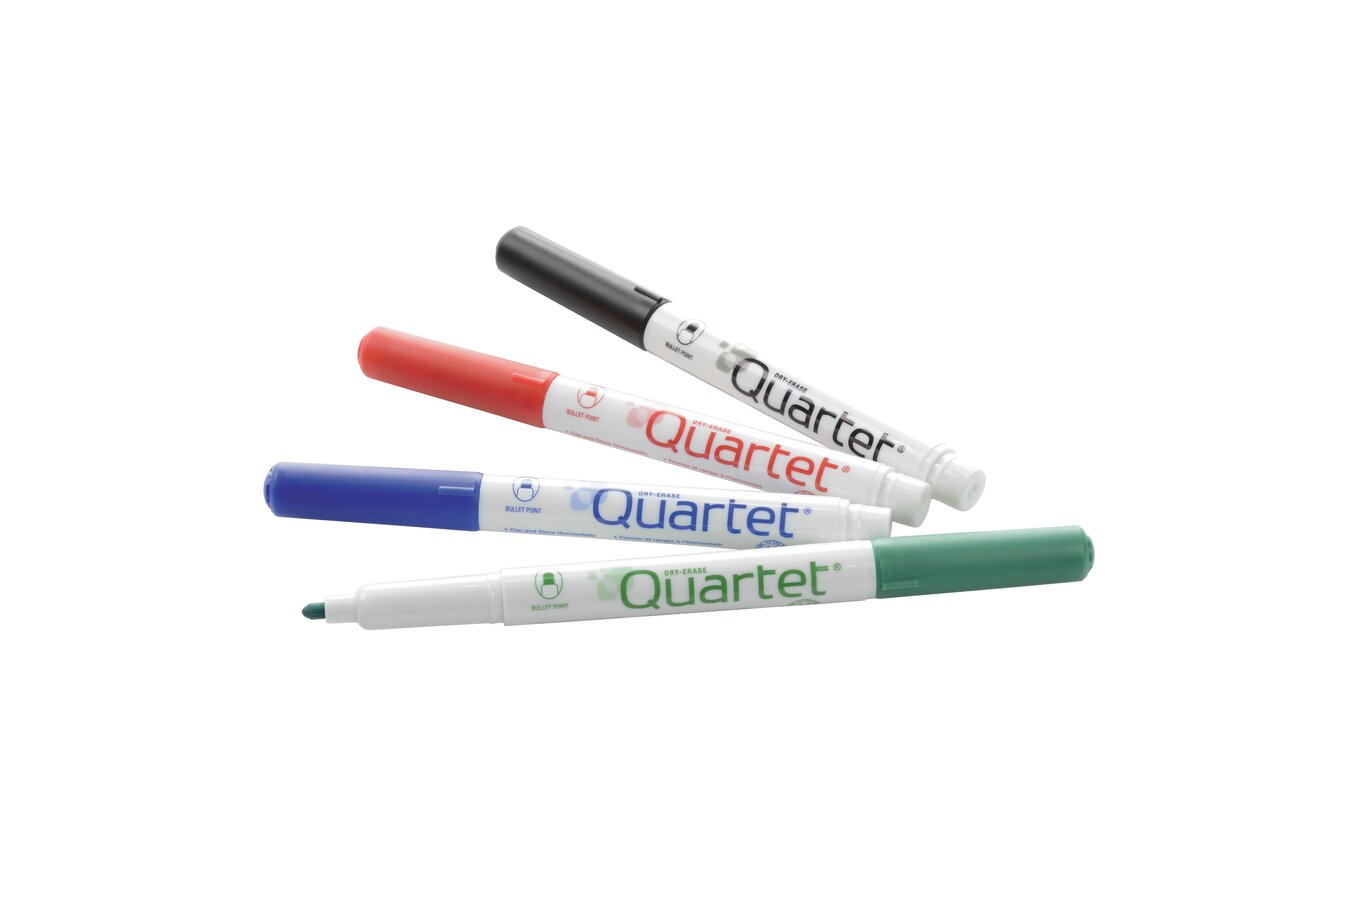  Quartet Dry Erase Markers, Whiteboard Markers, Chisel